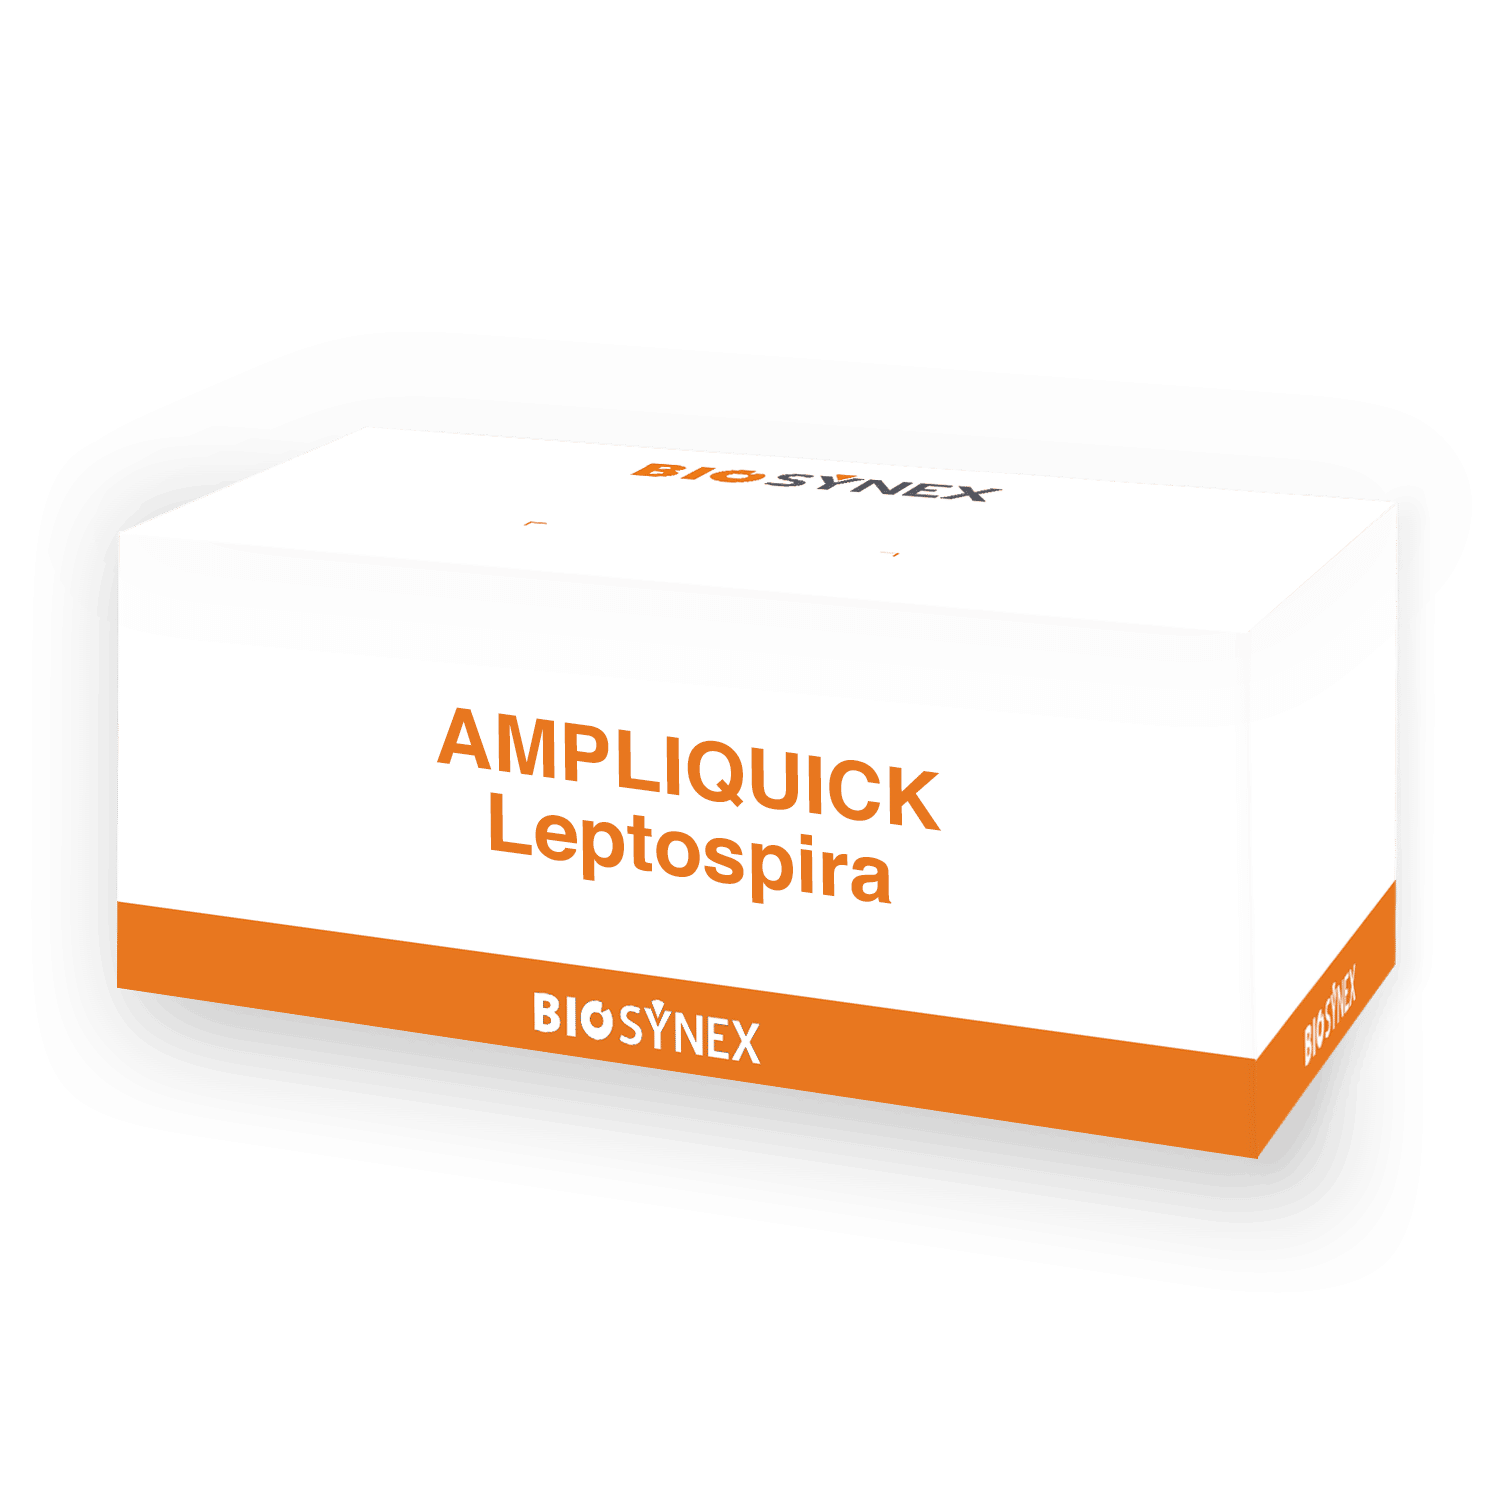 AMPLIQUICK Leptospirose biosynex diagnostic